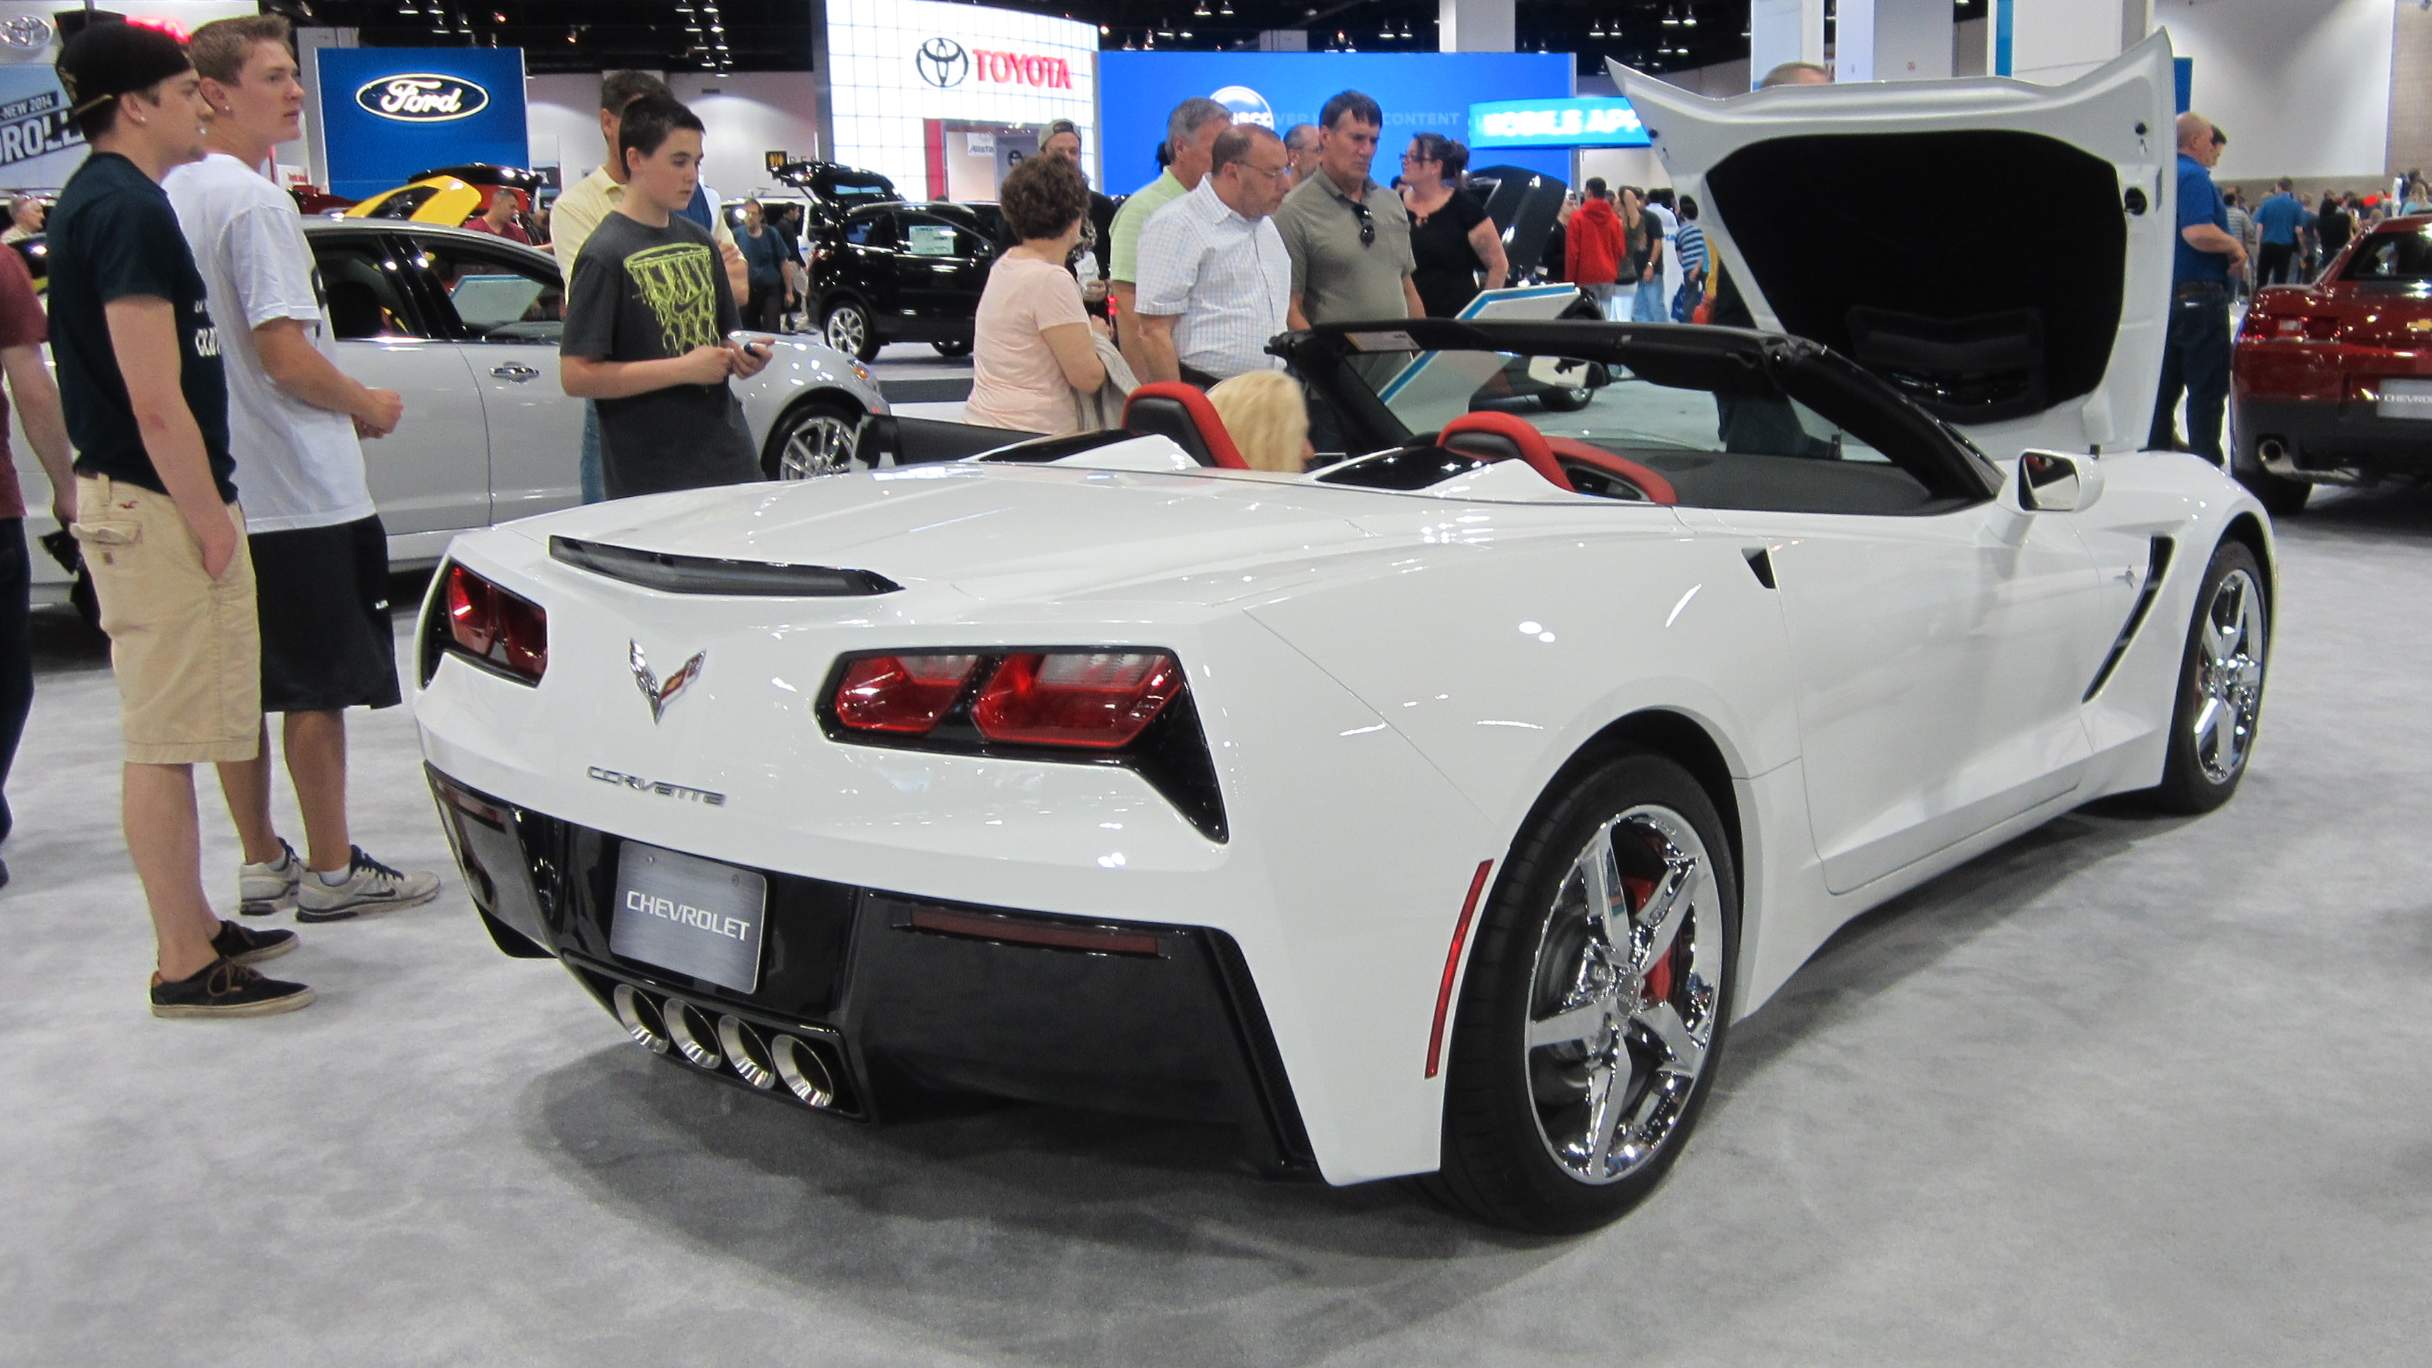 The new 2015 Chevrolet Corvette Stingray Convertible. Love it!